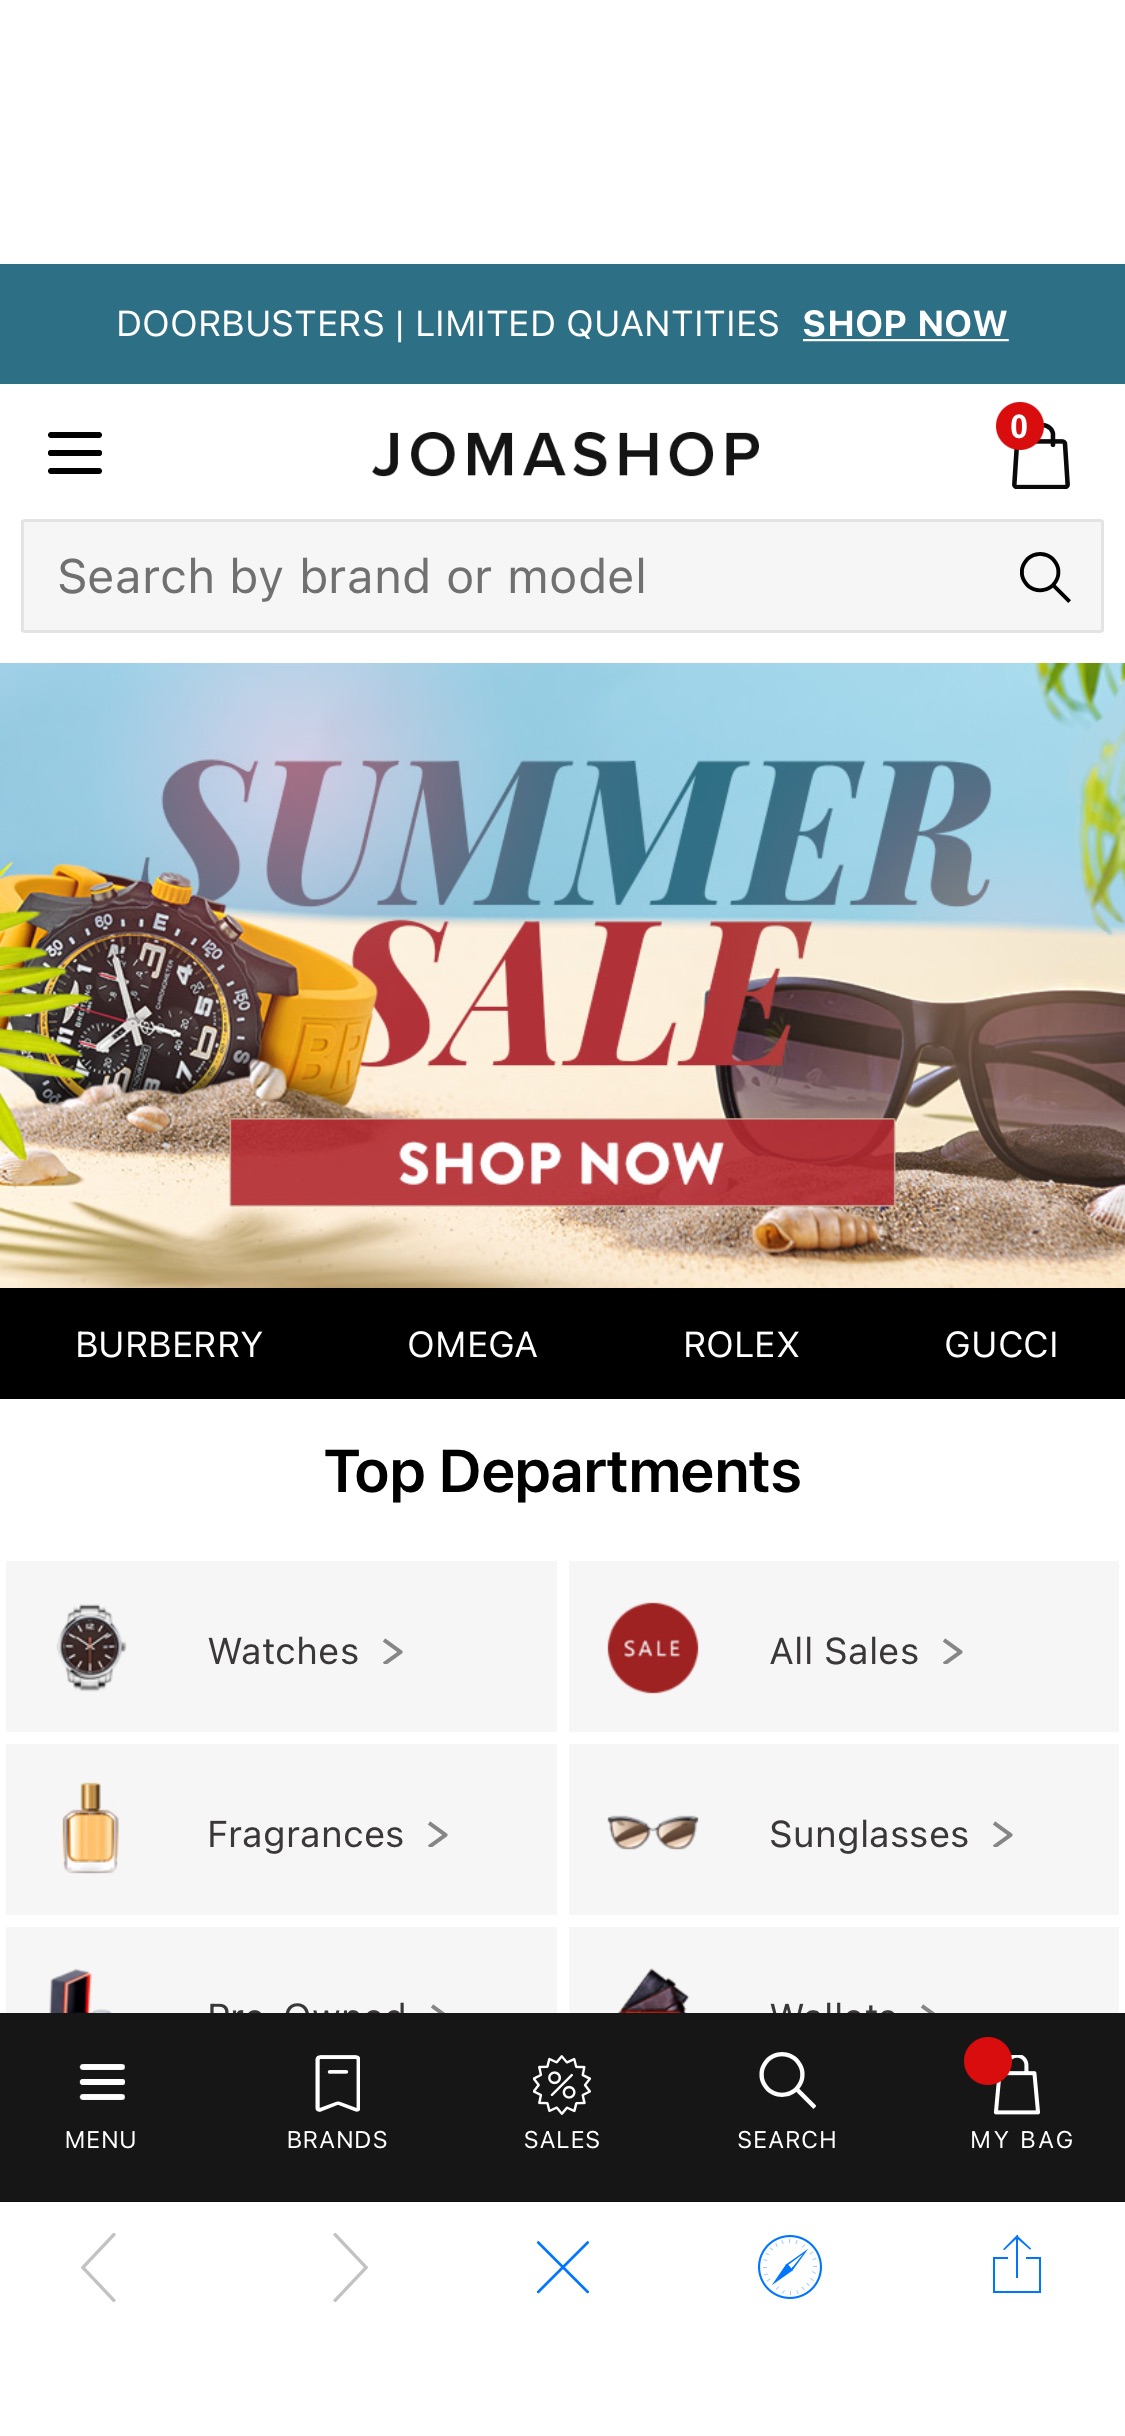 Jomashop.com: Online Shopping for Watches, Handbags, Sunglasses, Apparel, Beauty, Shoes, Pens & more - Jomashop
夏季墨镜大促！Ray-ban、Oakley、Gucci、Dior等低至2.5折